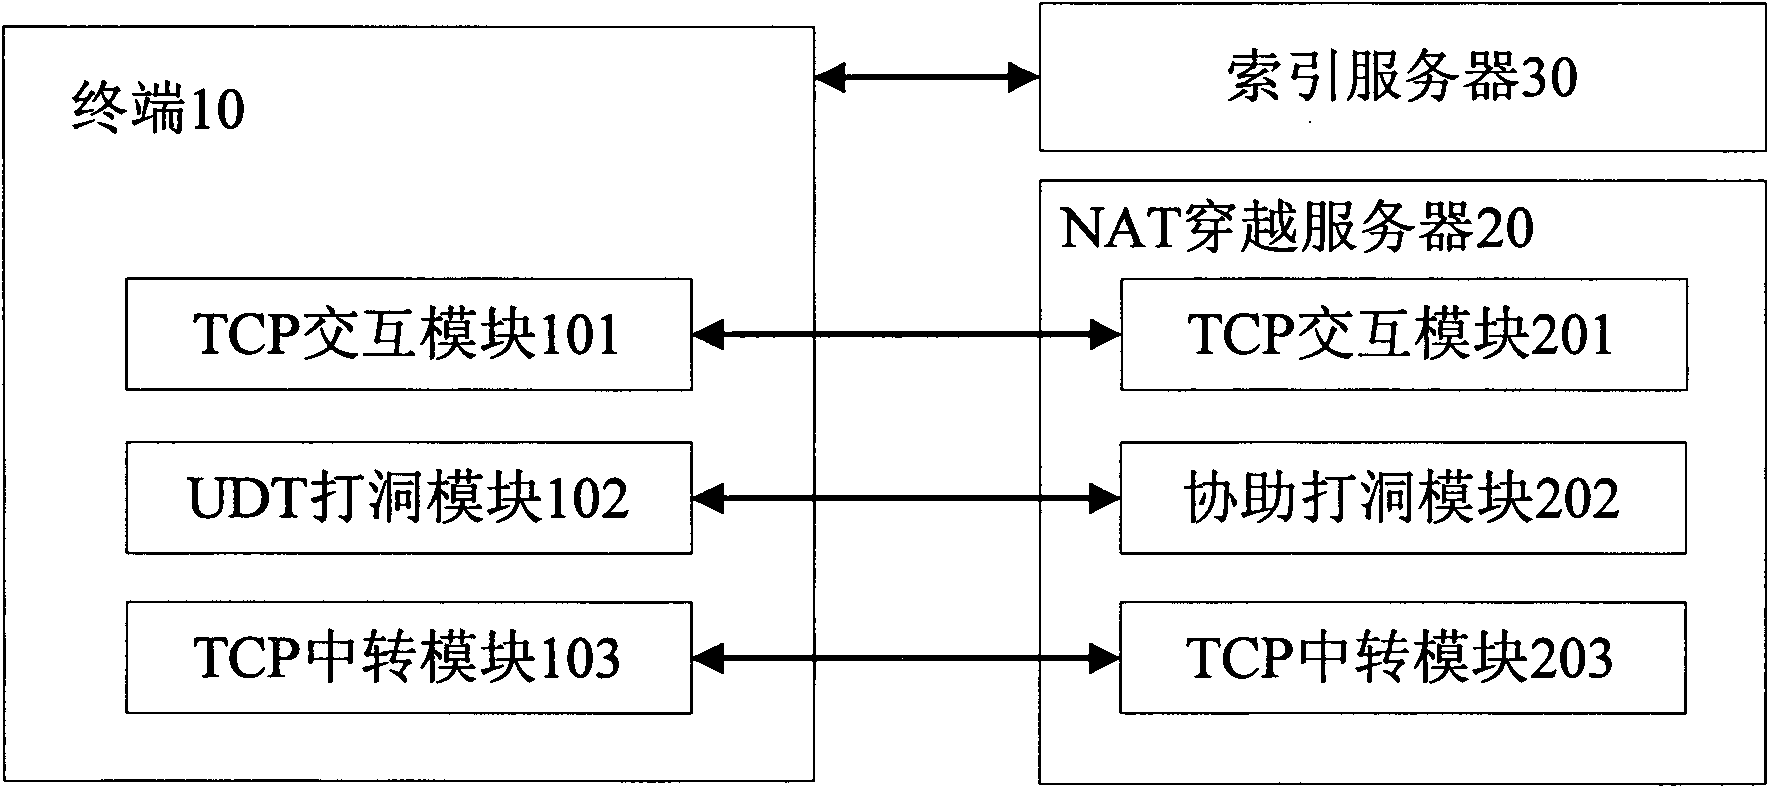 System and method for realizing NAT (Network Address Translation) traversal on basis of UDT (UDP (User Datagram Protocol)-based Data Transfer) and TCP (Transmission Control Protocol) transfer